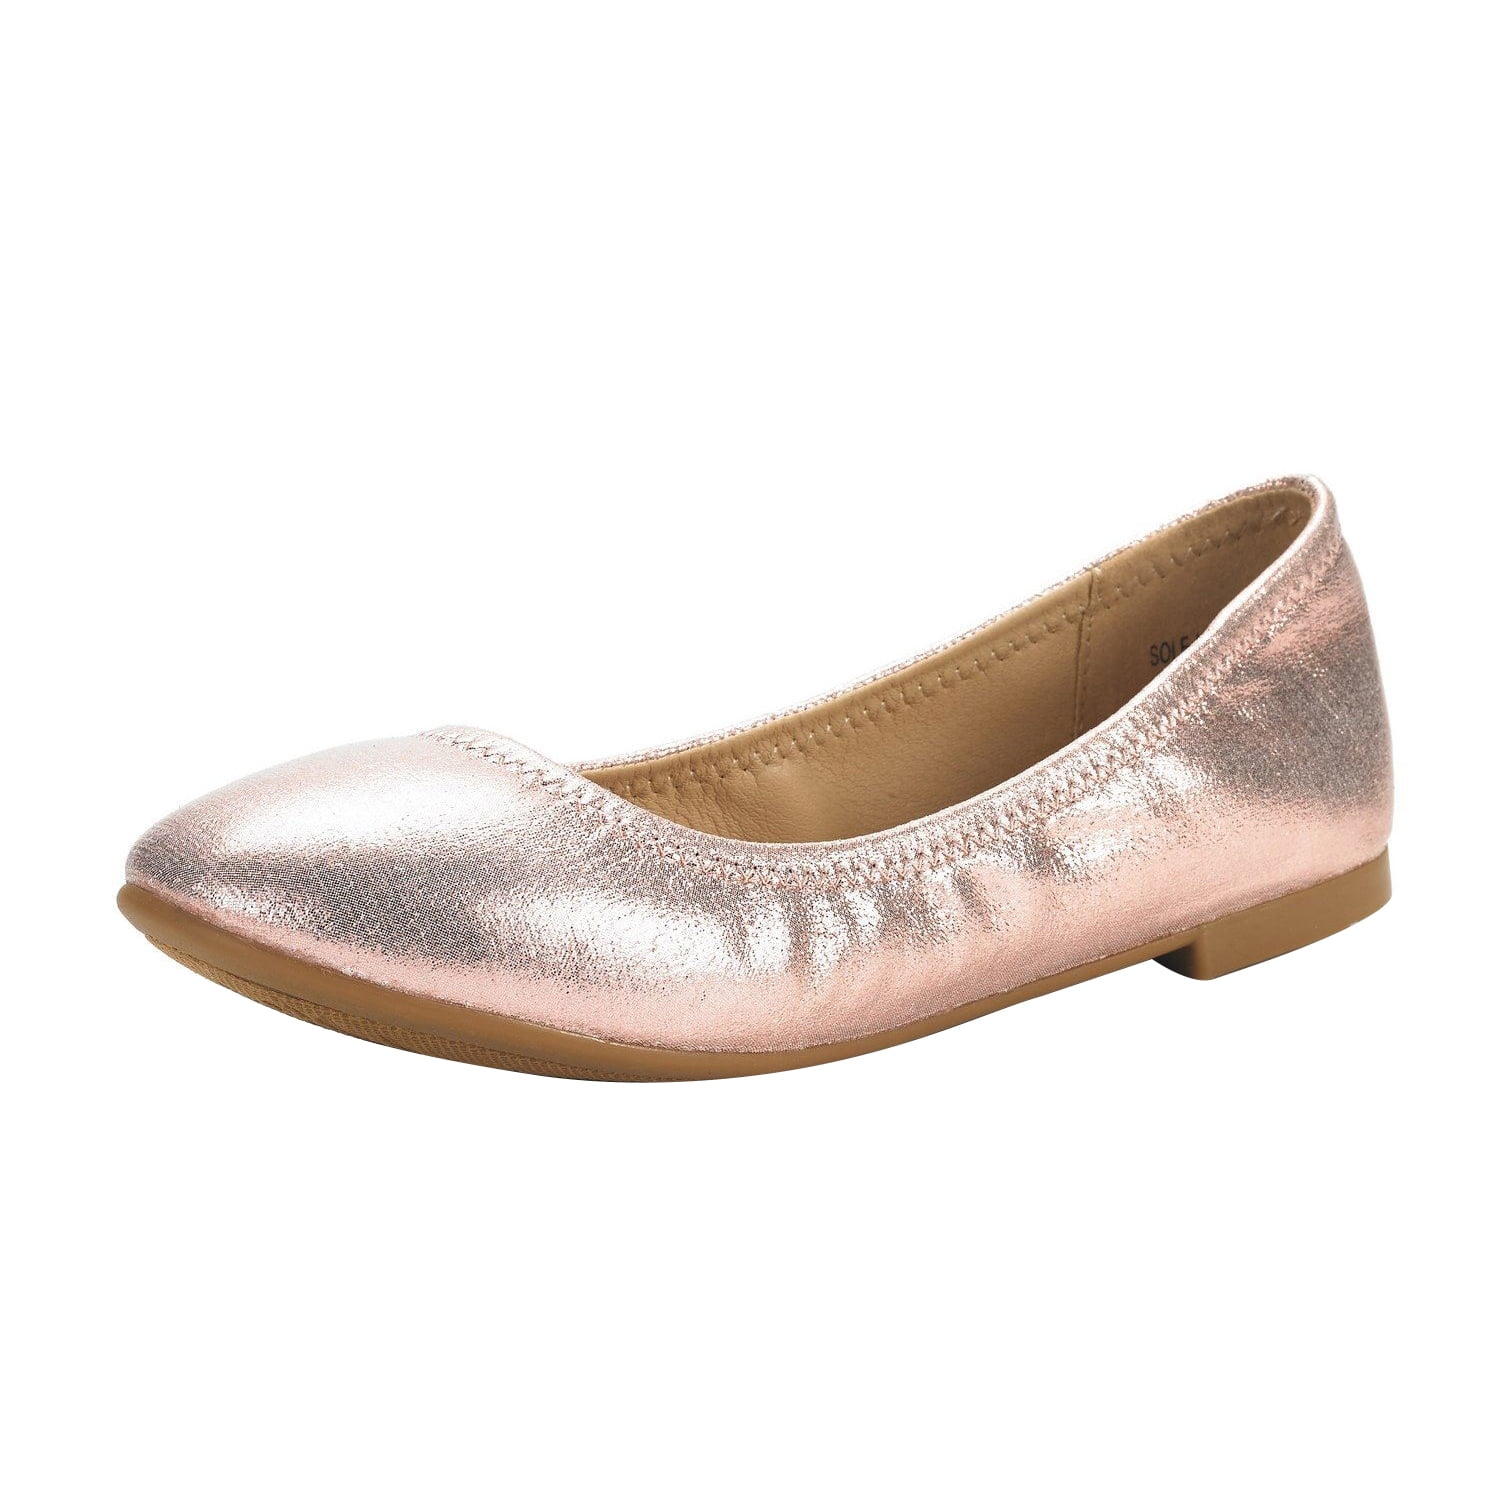 Women's Flats Rhinestones Slip On Pointy Toe slip on ballet  Shoes Plus Size MON 